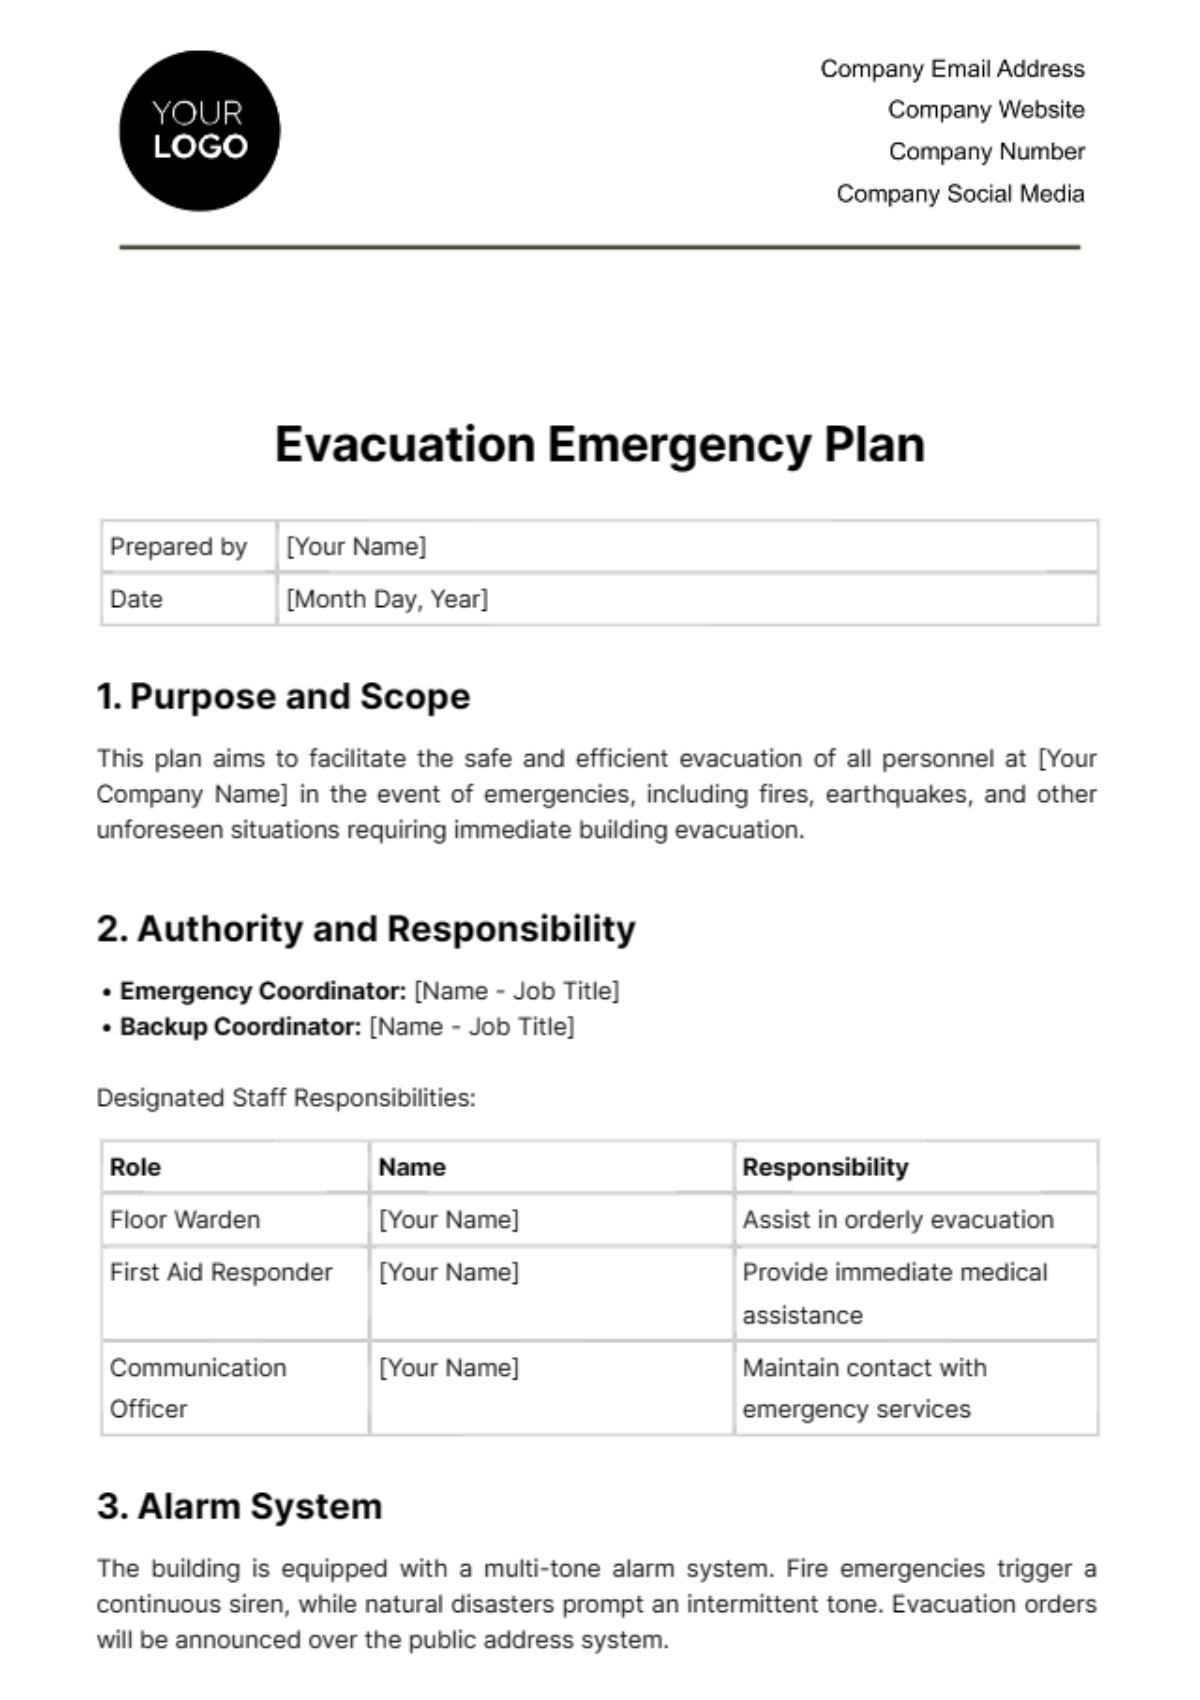 Free Evacuation Emergency Plan Template